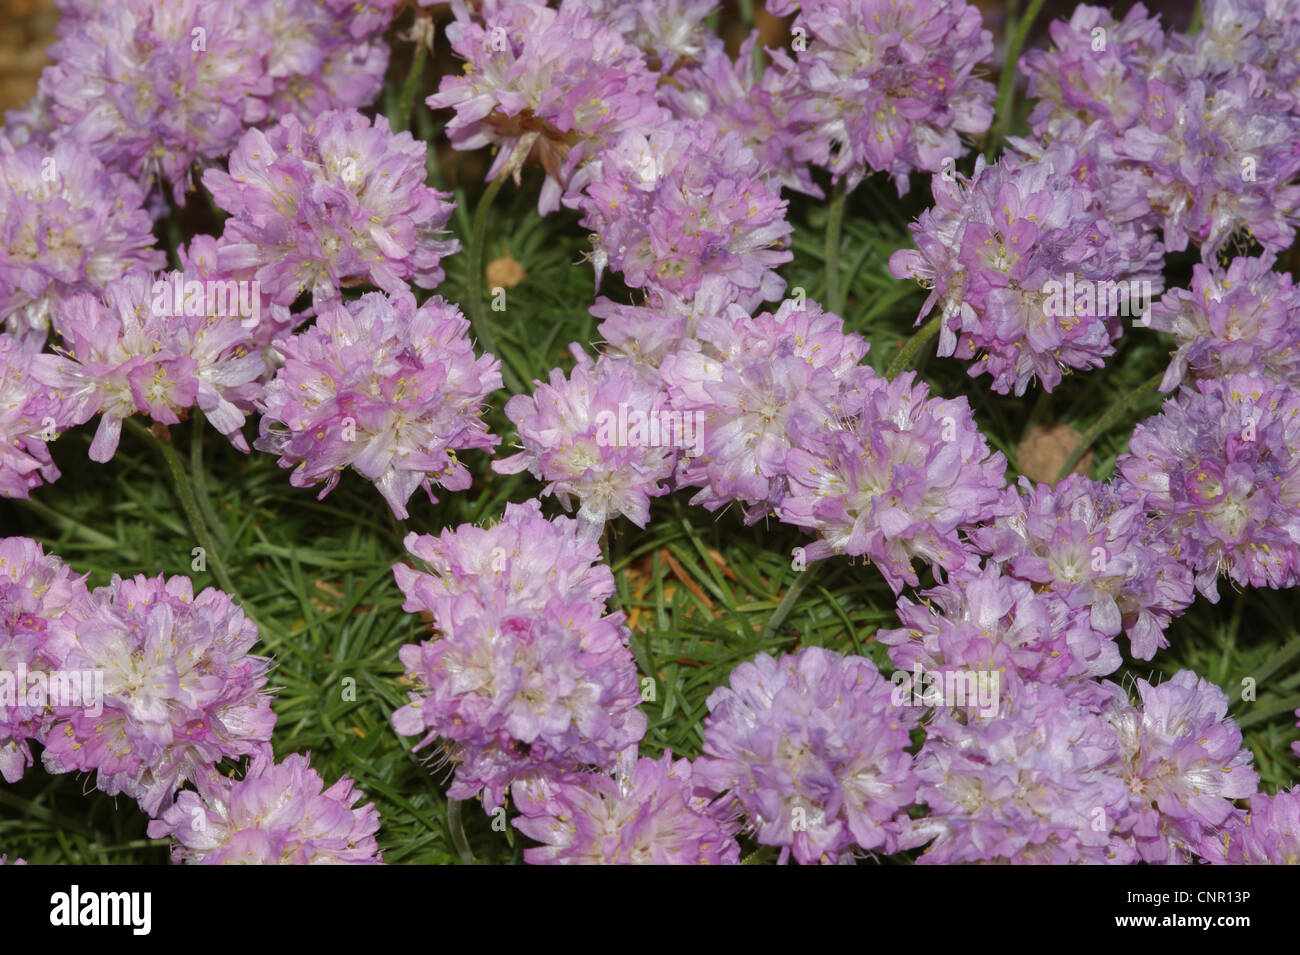 Armeria juniperifolia 'Bevan's Variety' Stock Photo